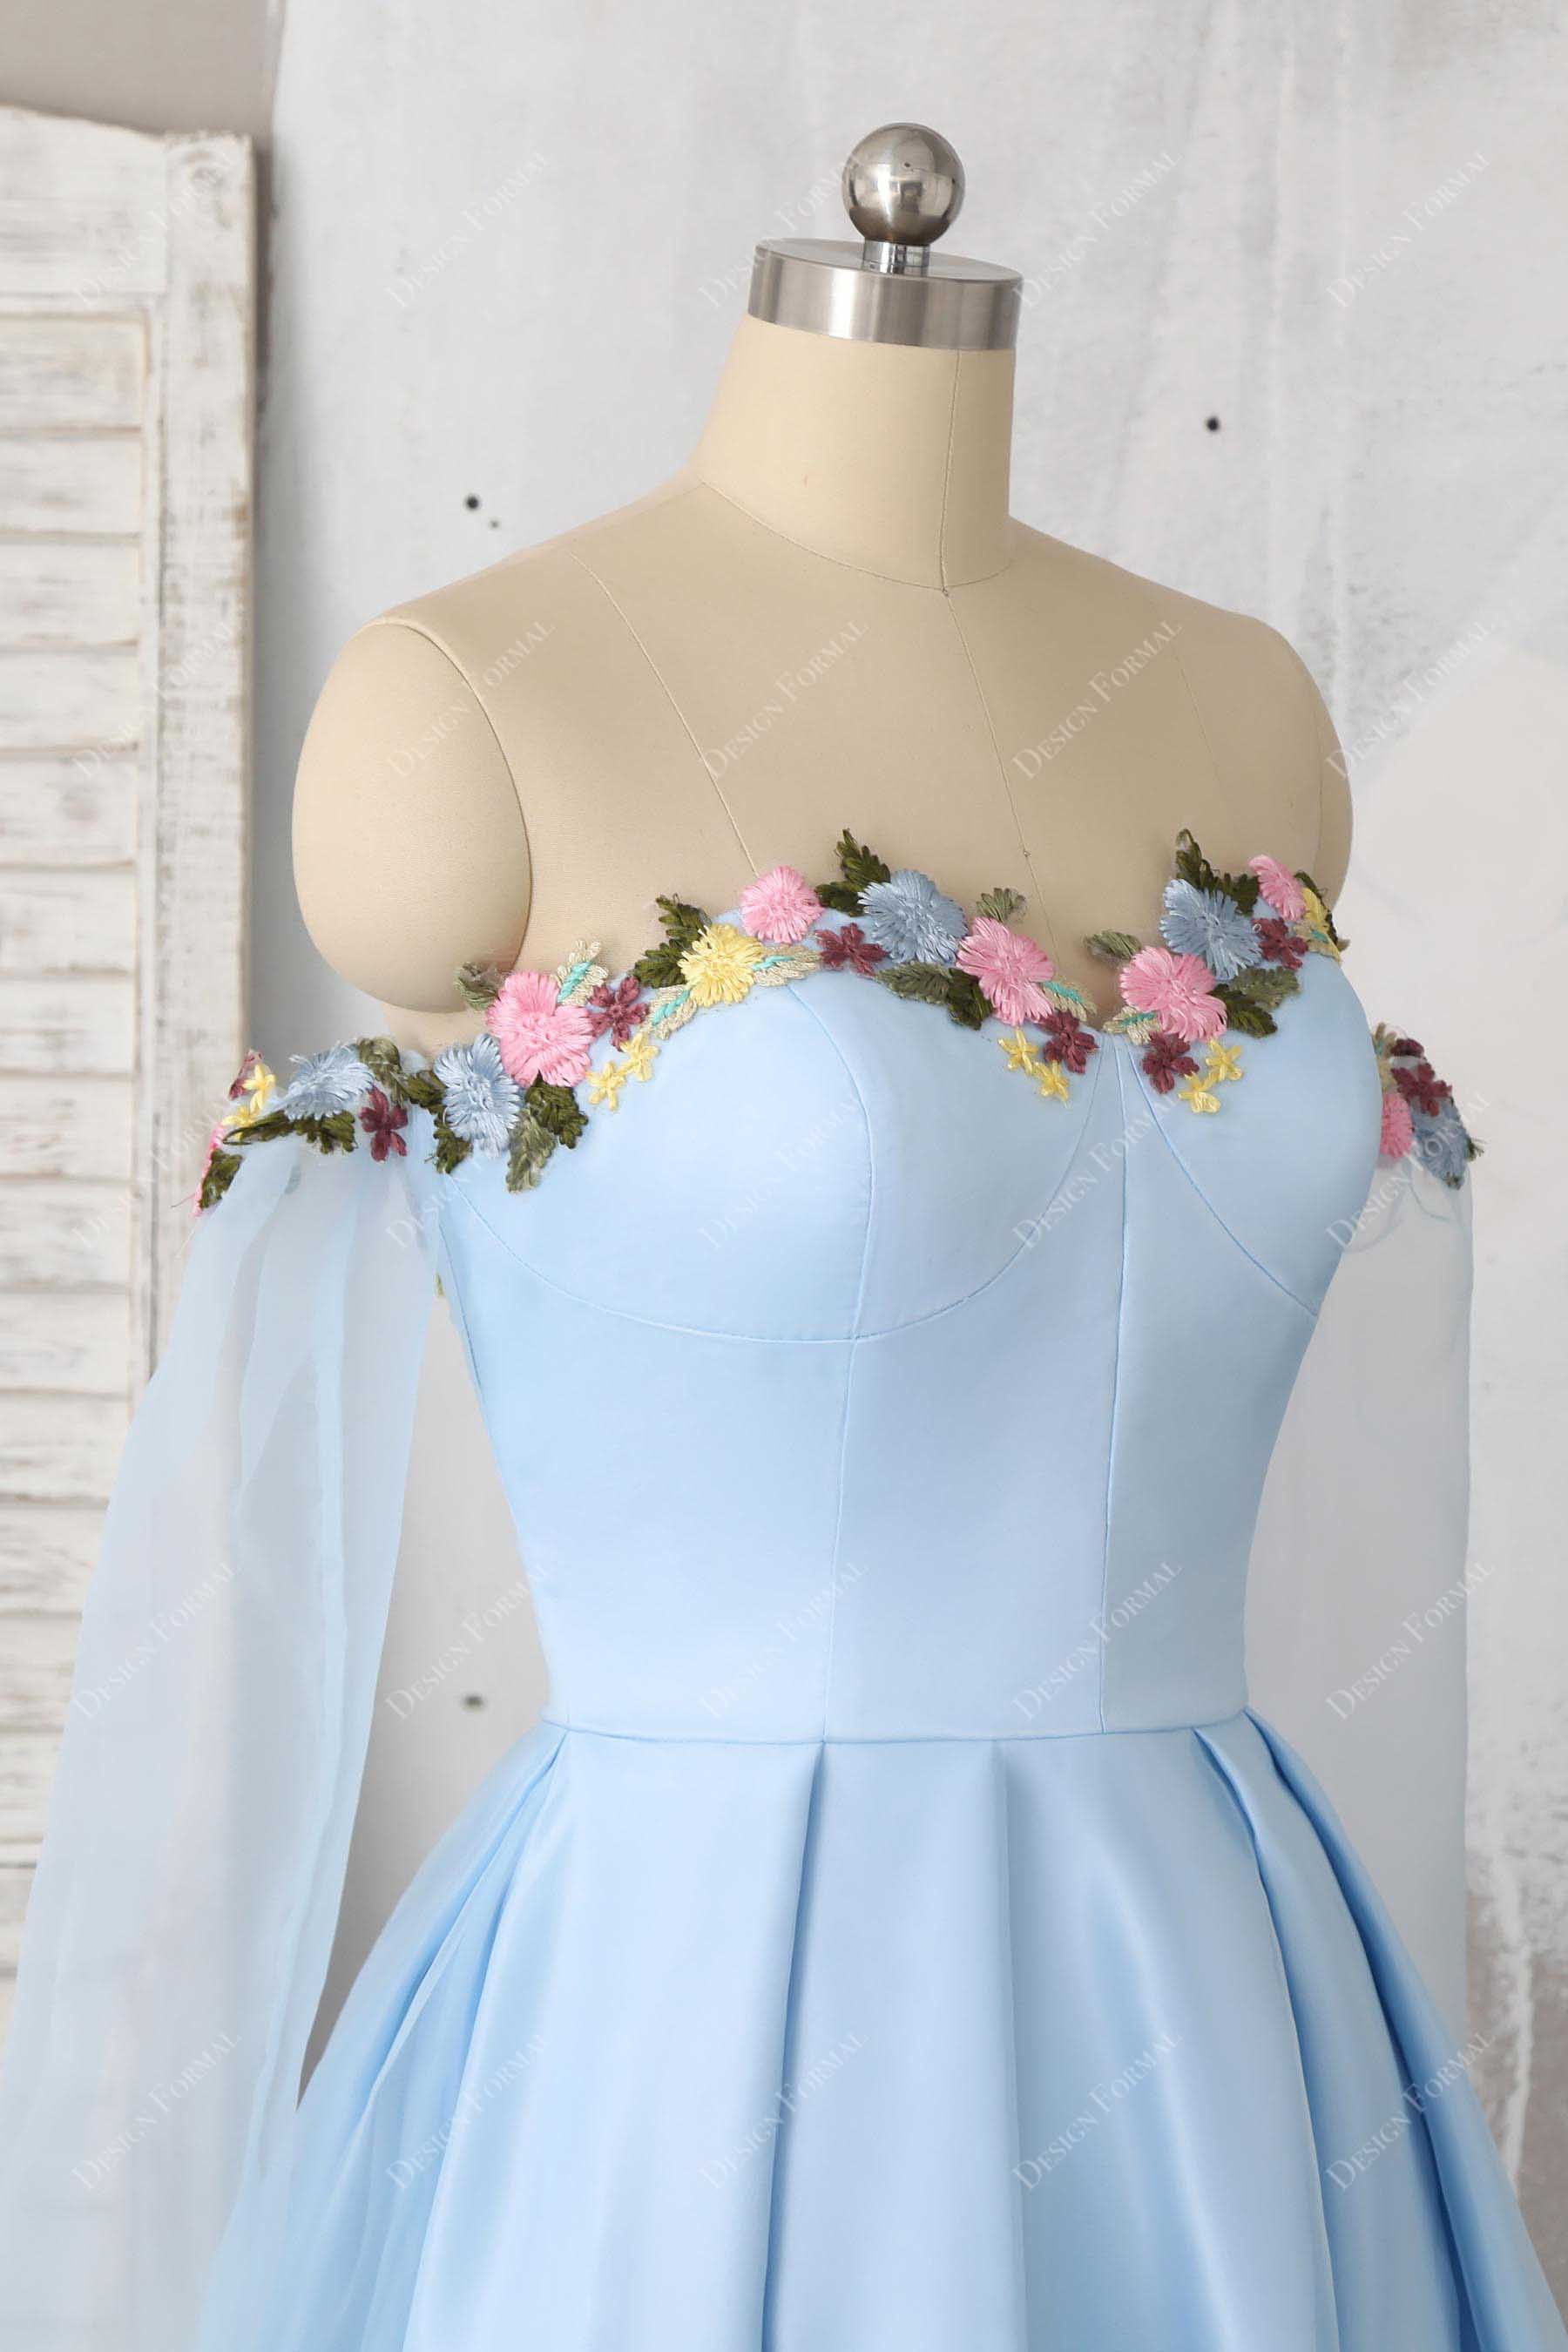 sweetheart neck flower dress